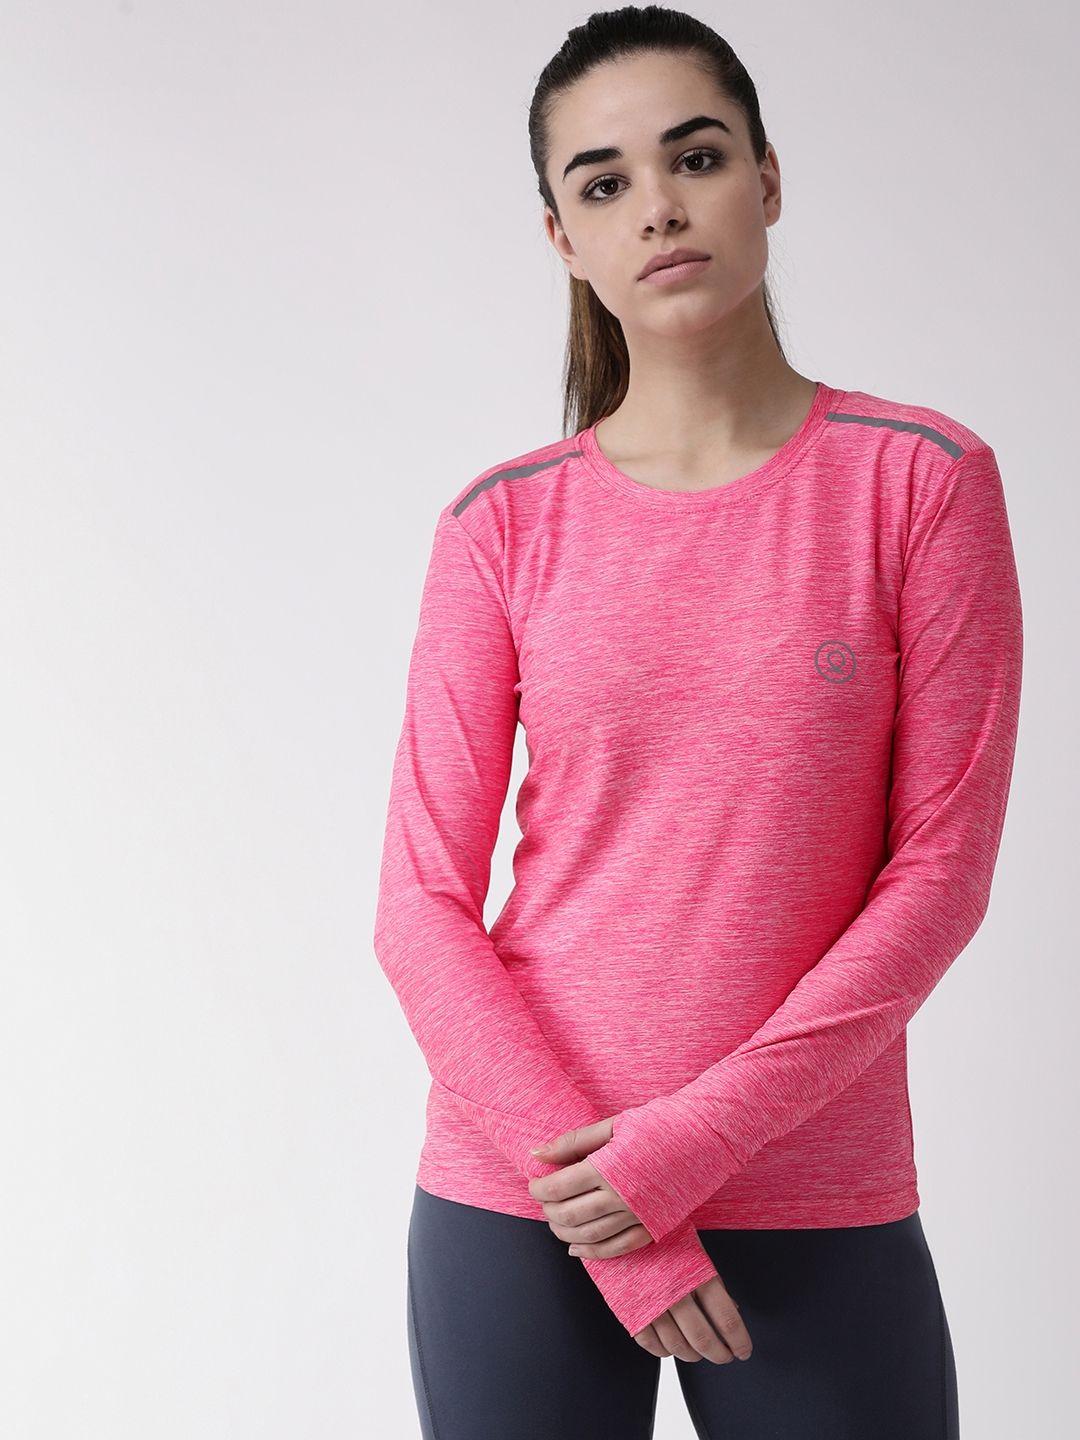 chkokko-women-pink-self-design-round-neck-training-t-shirt